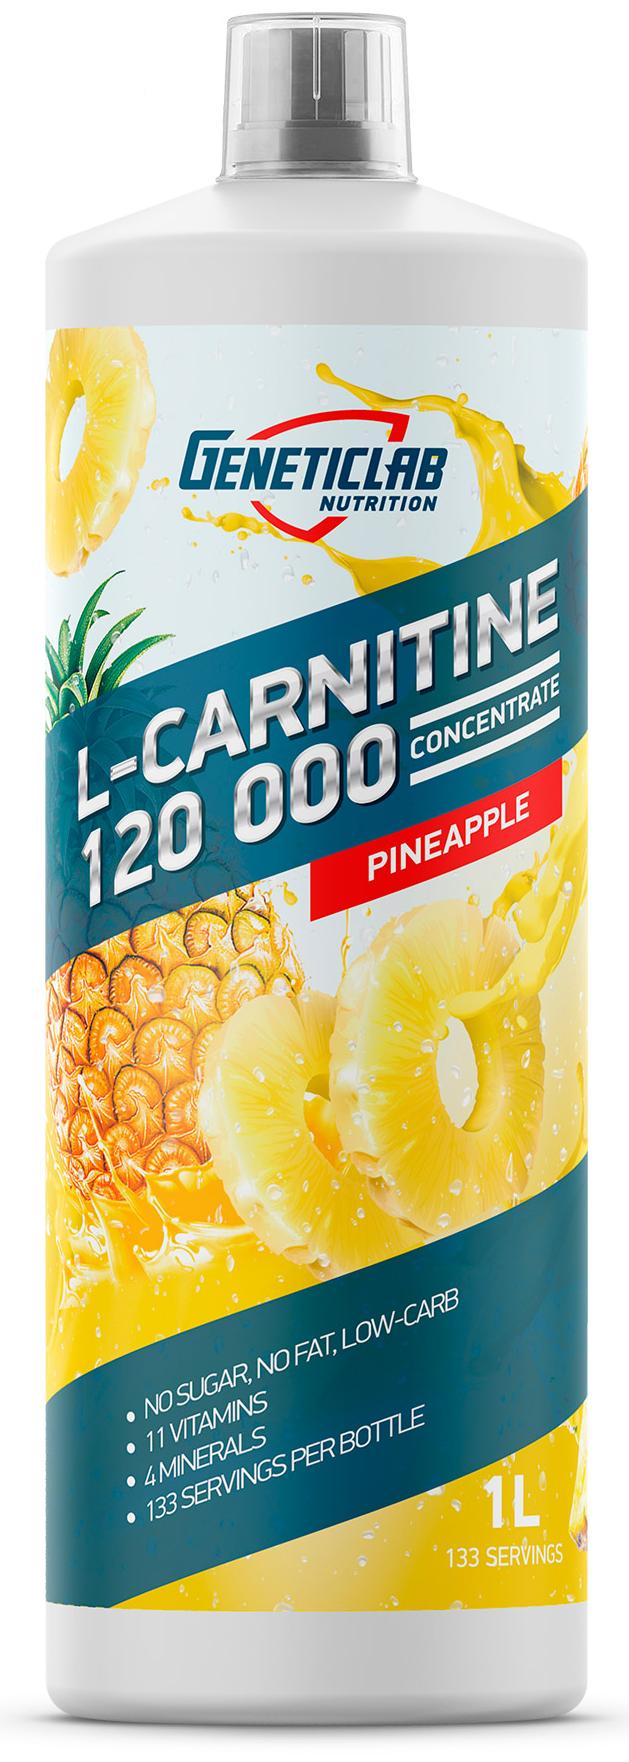 L-Carnitine 120 000  сoncentrate, вкус ананас, 1000 мл, Geneticlab - фото 1